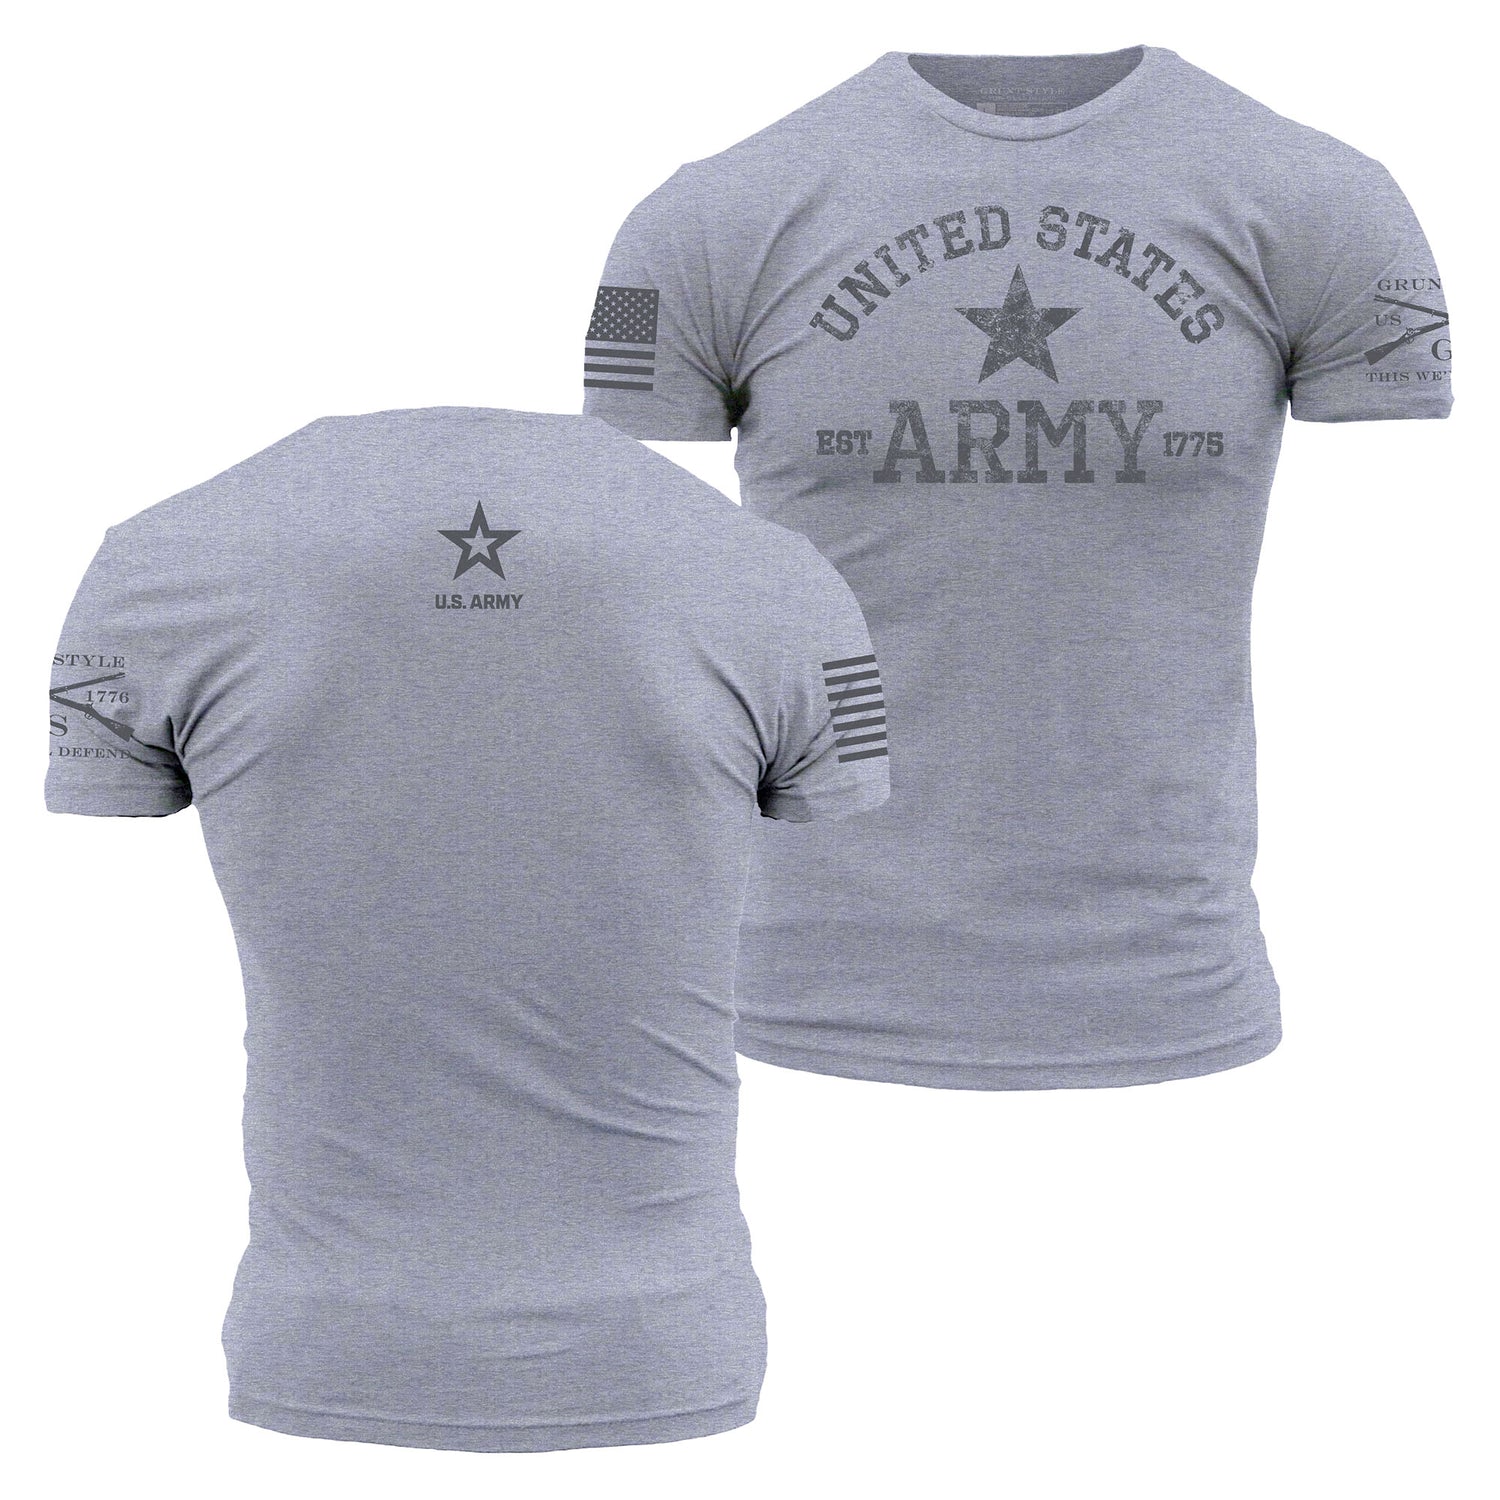 Army Shirt - United States Army 